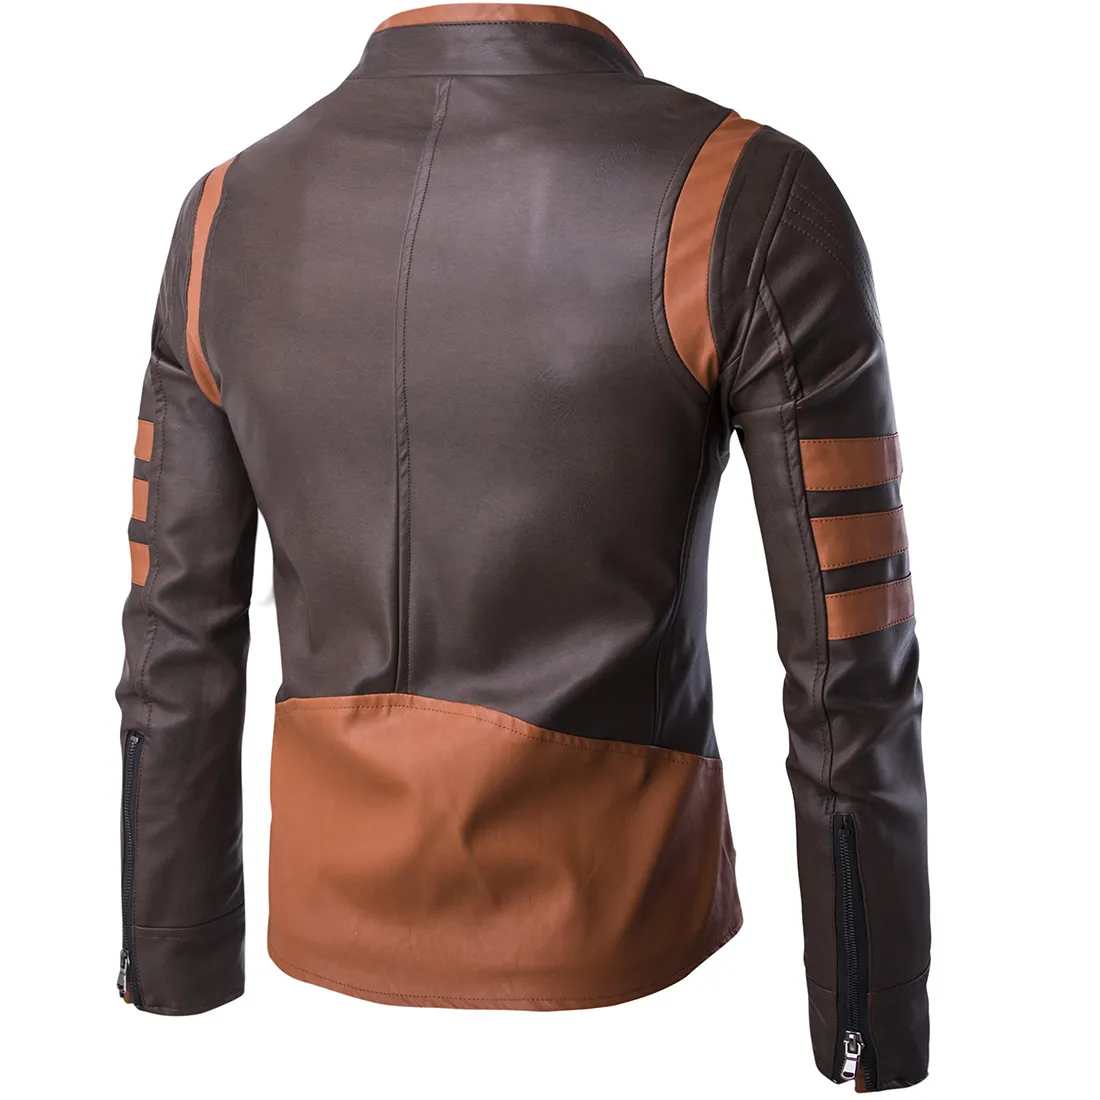 5XL Resident Evil Leather Men Jacka Höst Wolverine Fashion Cool Snygg Leather Jacket Zipper Stand Collar Motor Jacka för Mens J160809